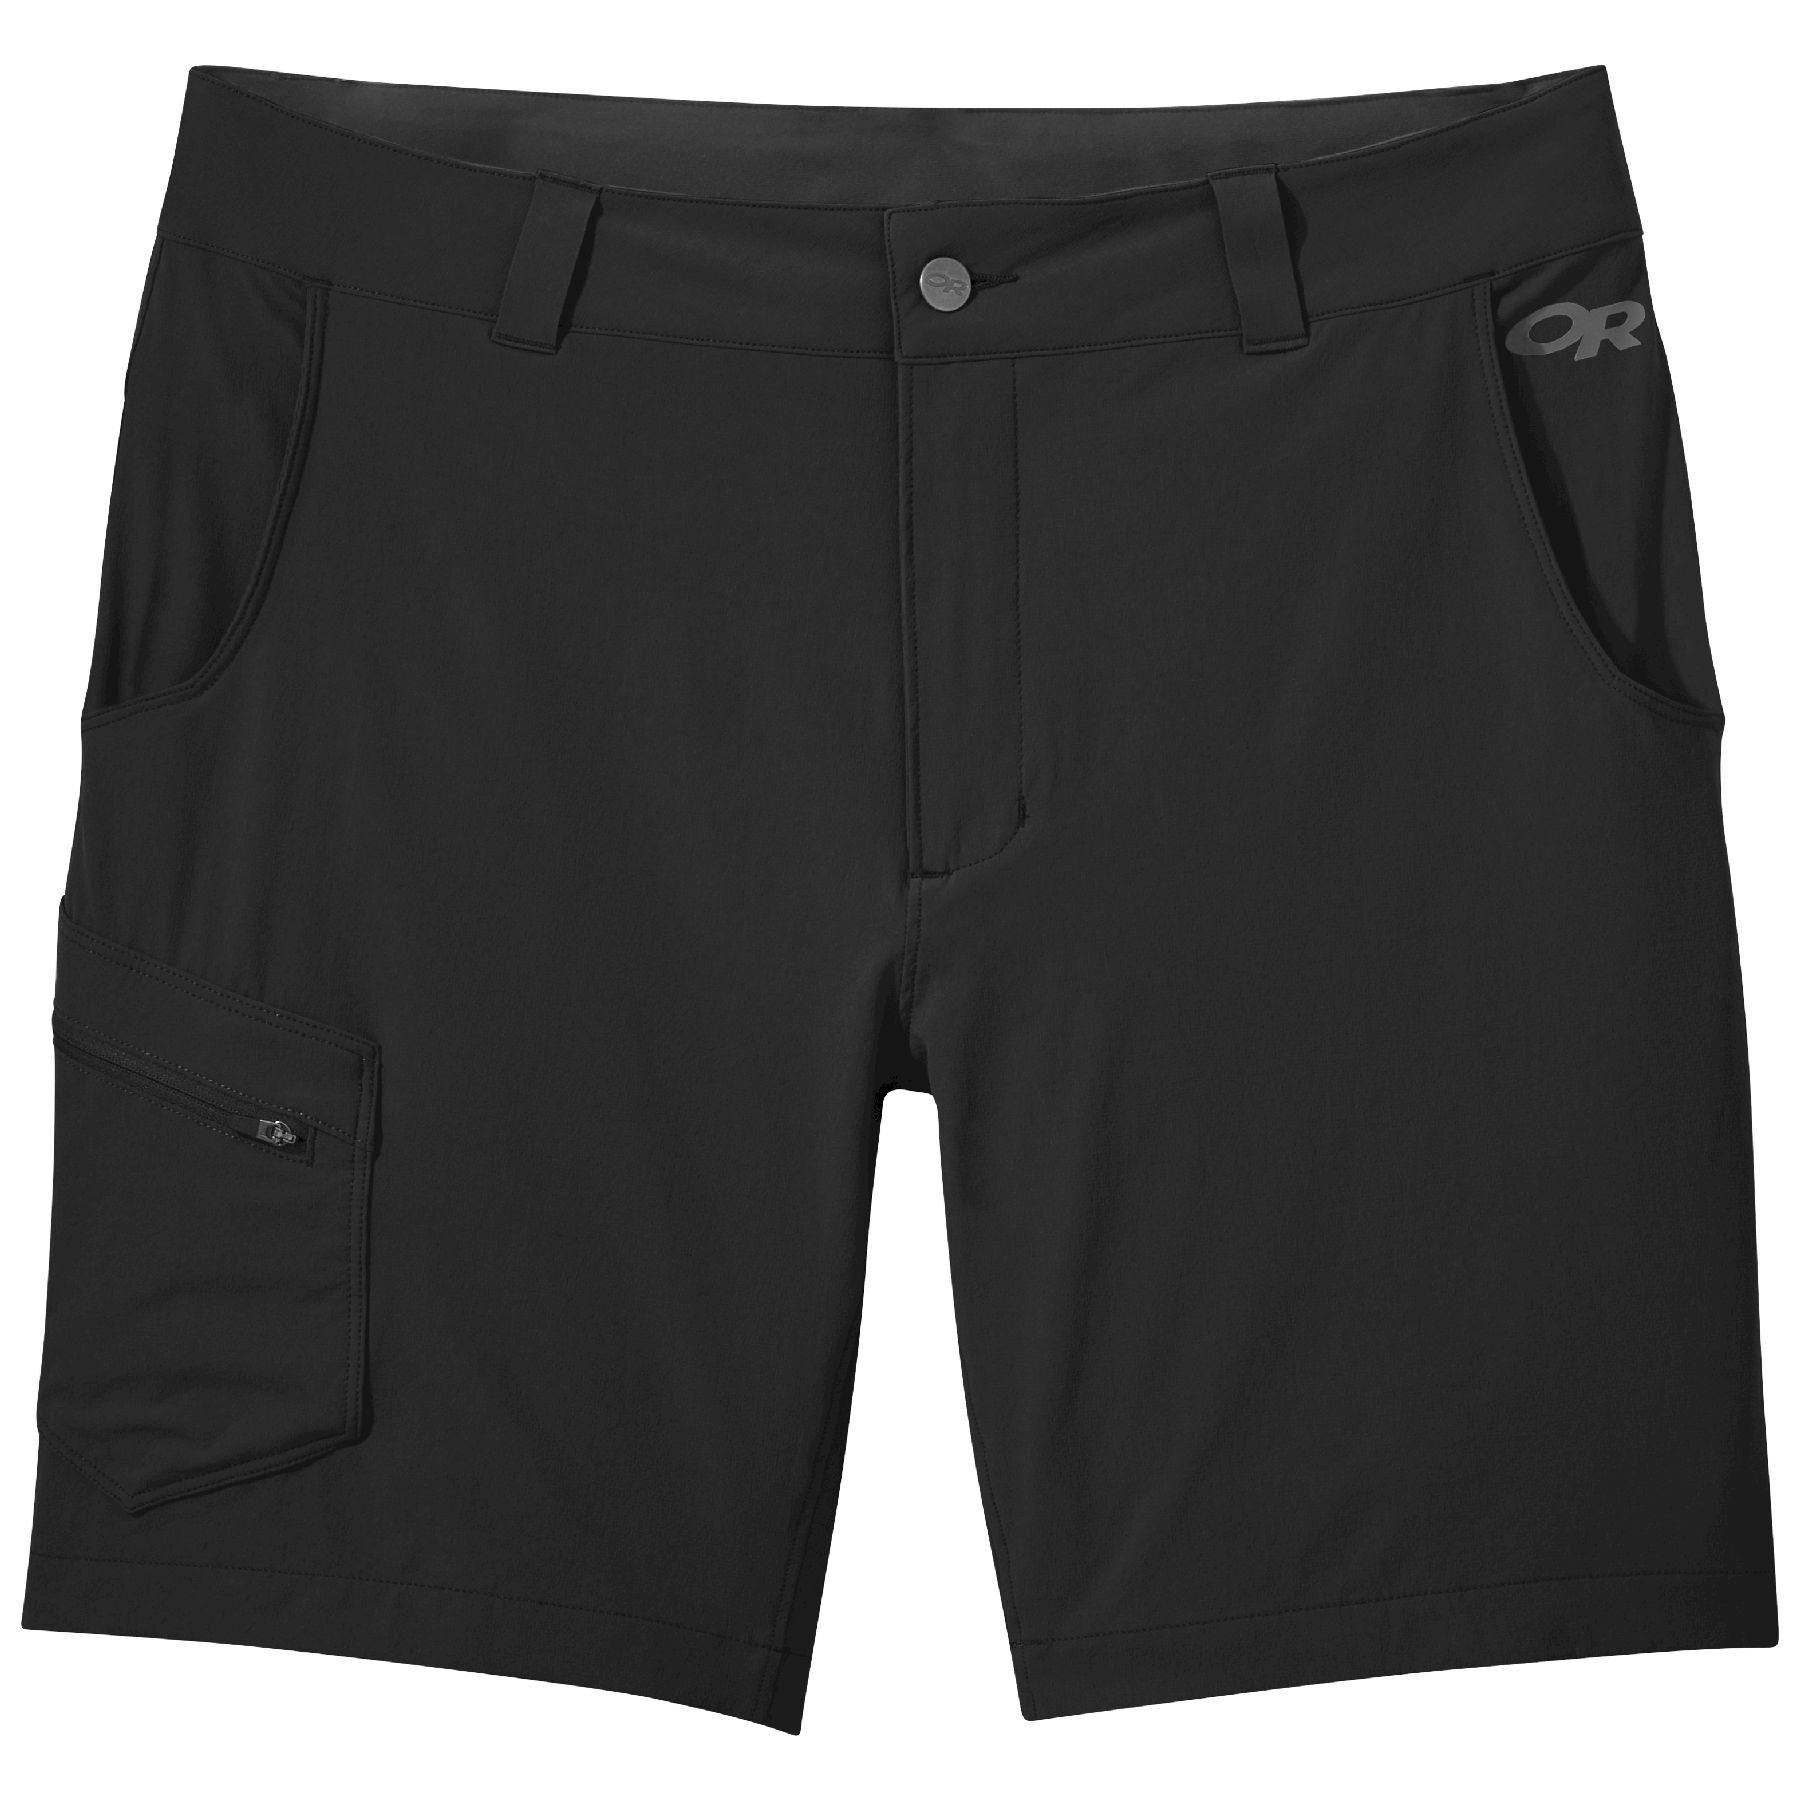 Outdoor Research Ferrosi Shorts - 10" Inseam - Walking shorts - Men's